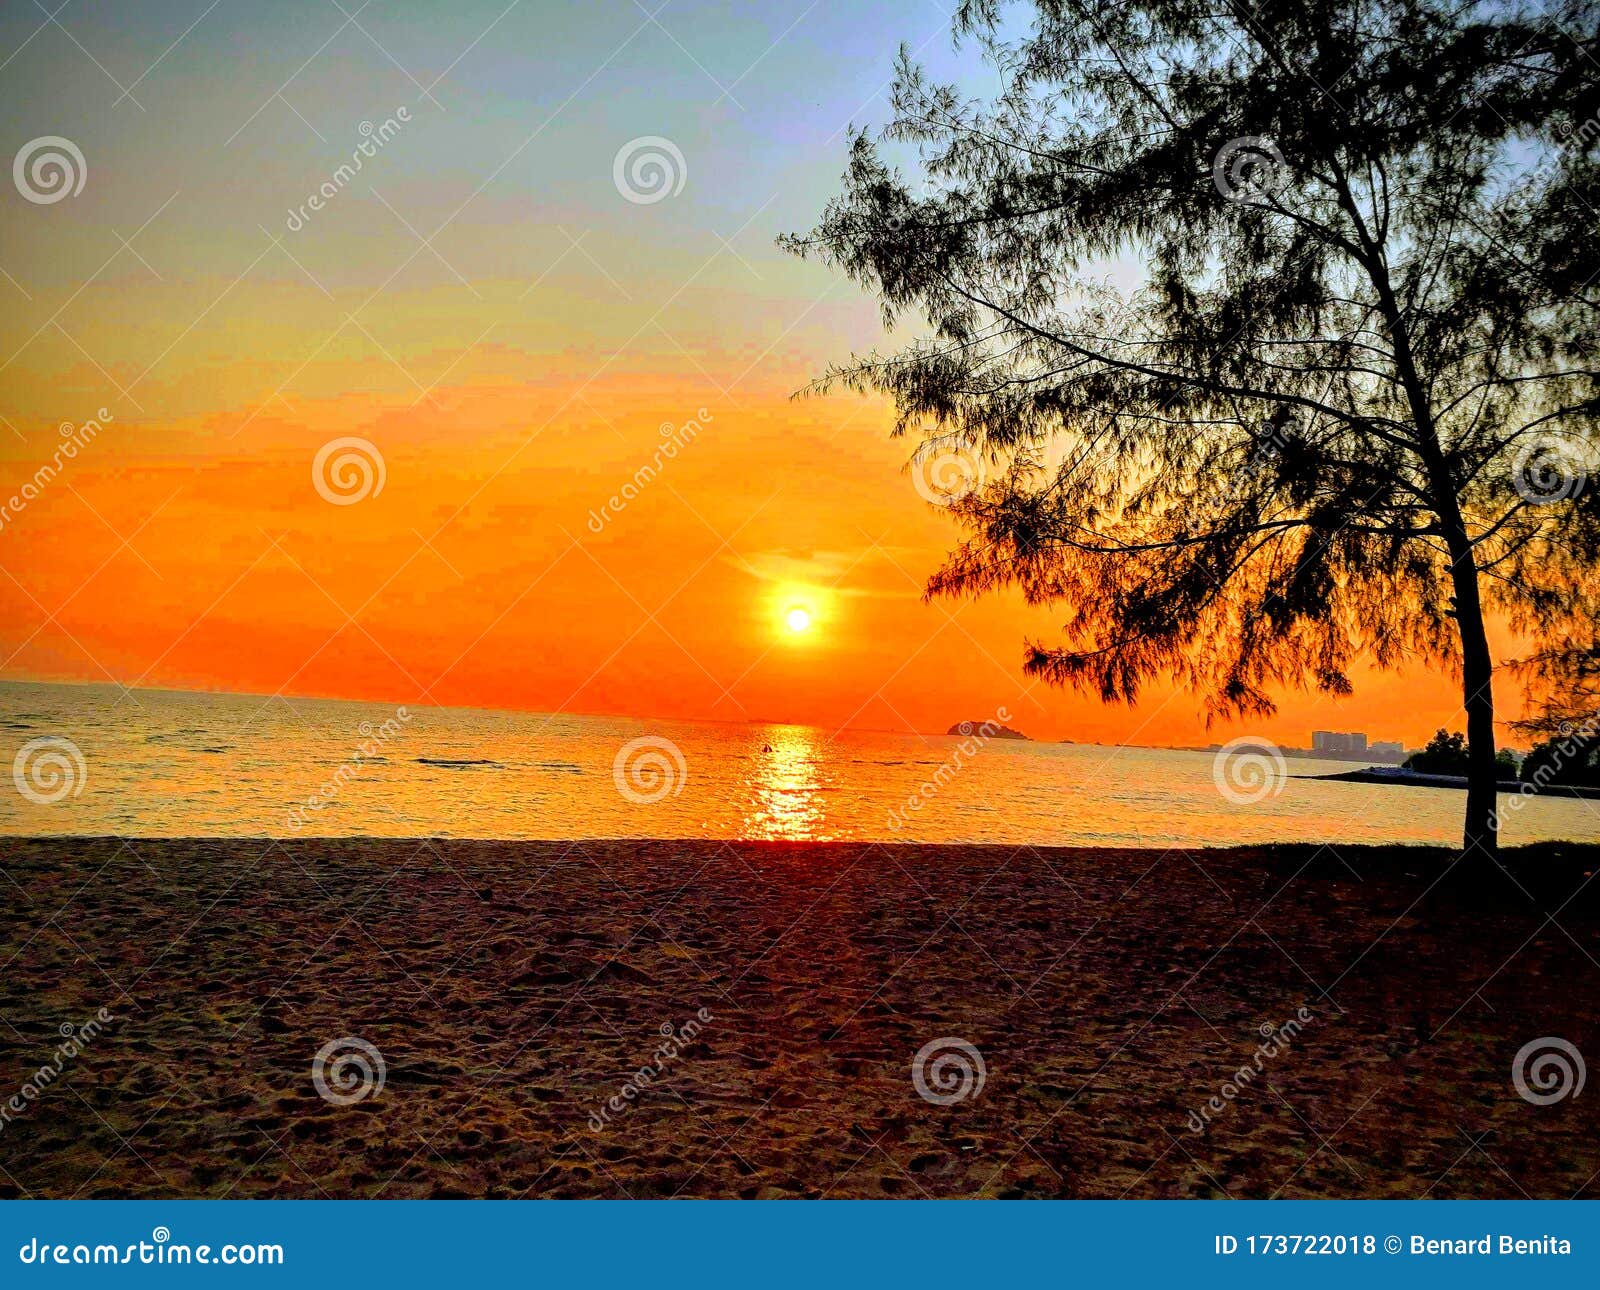 Capture the Beautiful Moment. Sunset Stock Photo - Image of moment,  beautiful: 173722018